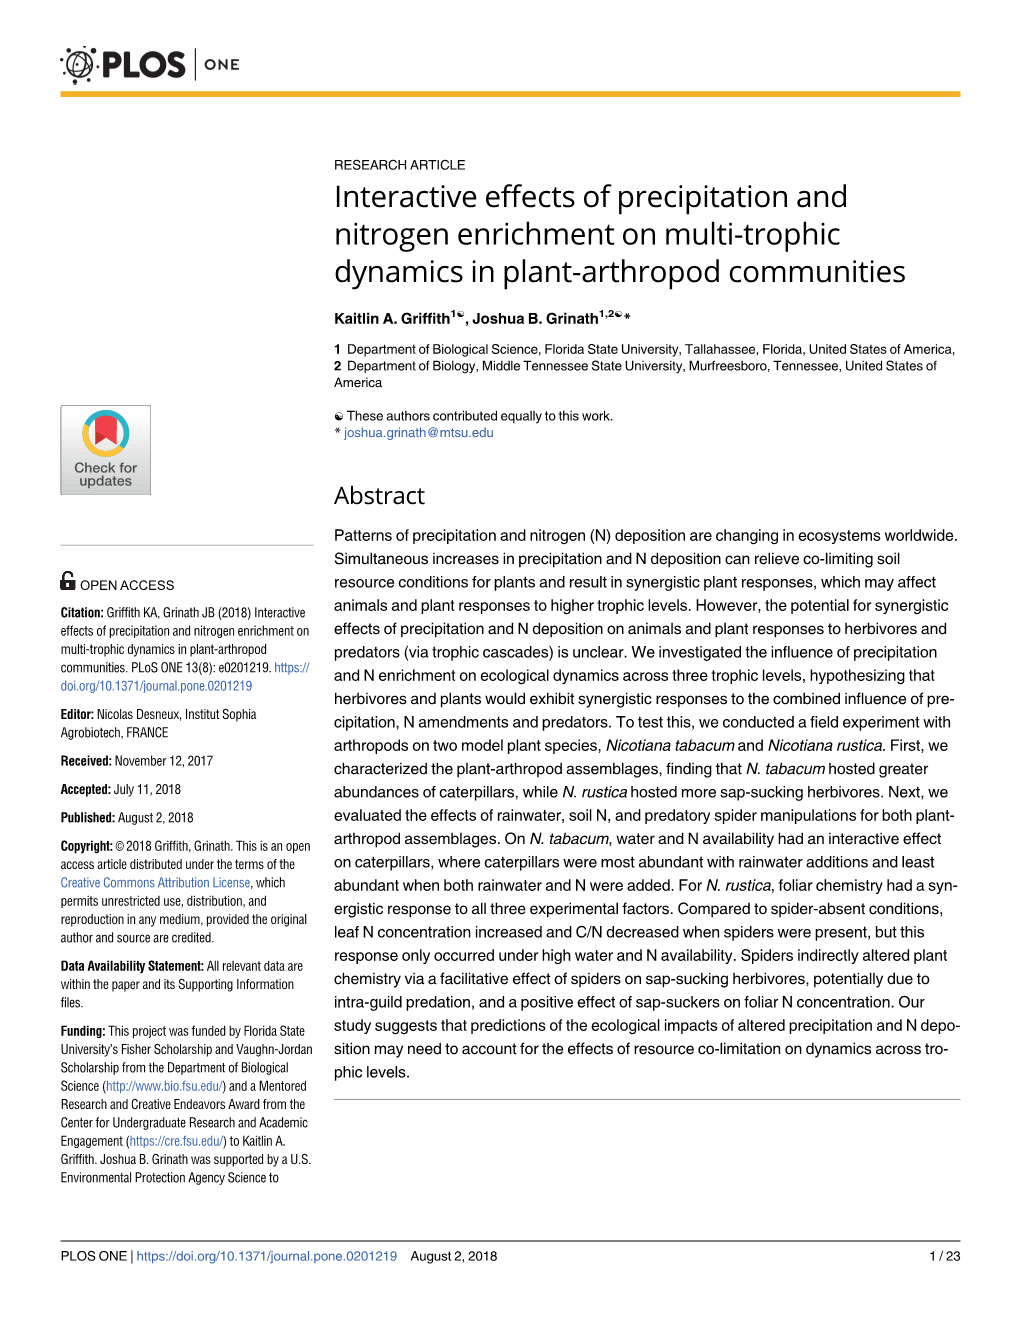 Interactive Effects of Precipitation and Nitrogen Enrichment on Multi-Trophic Dynamics in Plant-Arthropod Communities